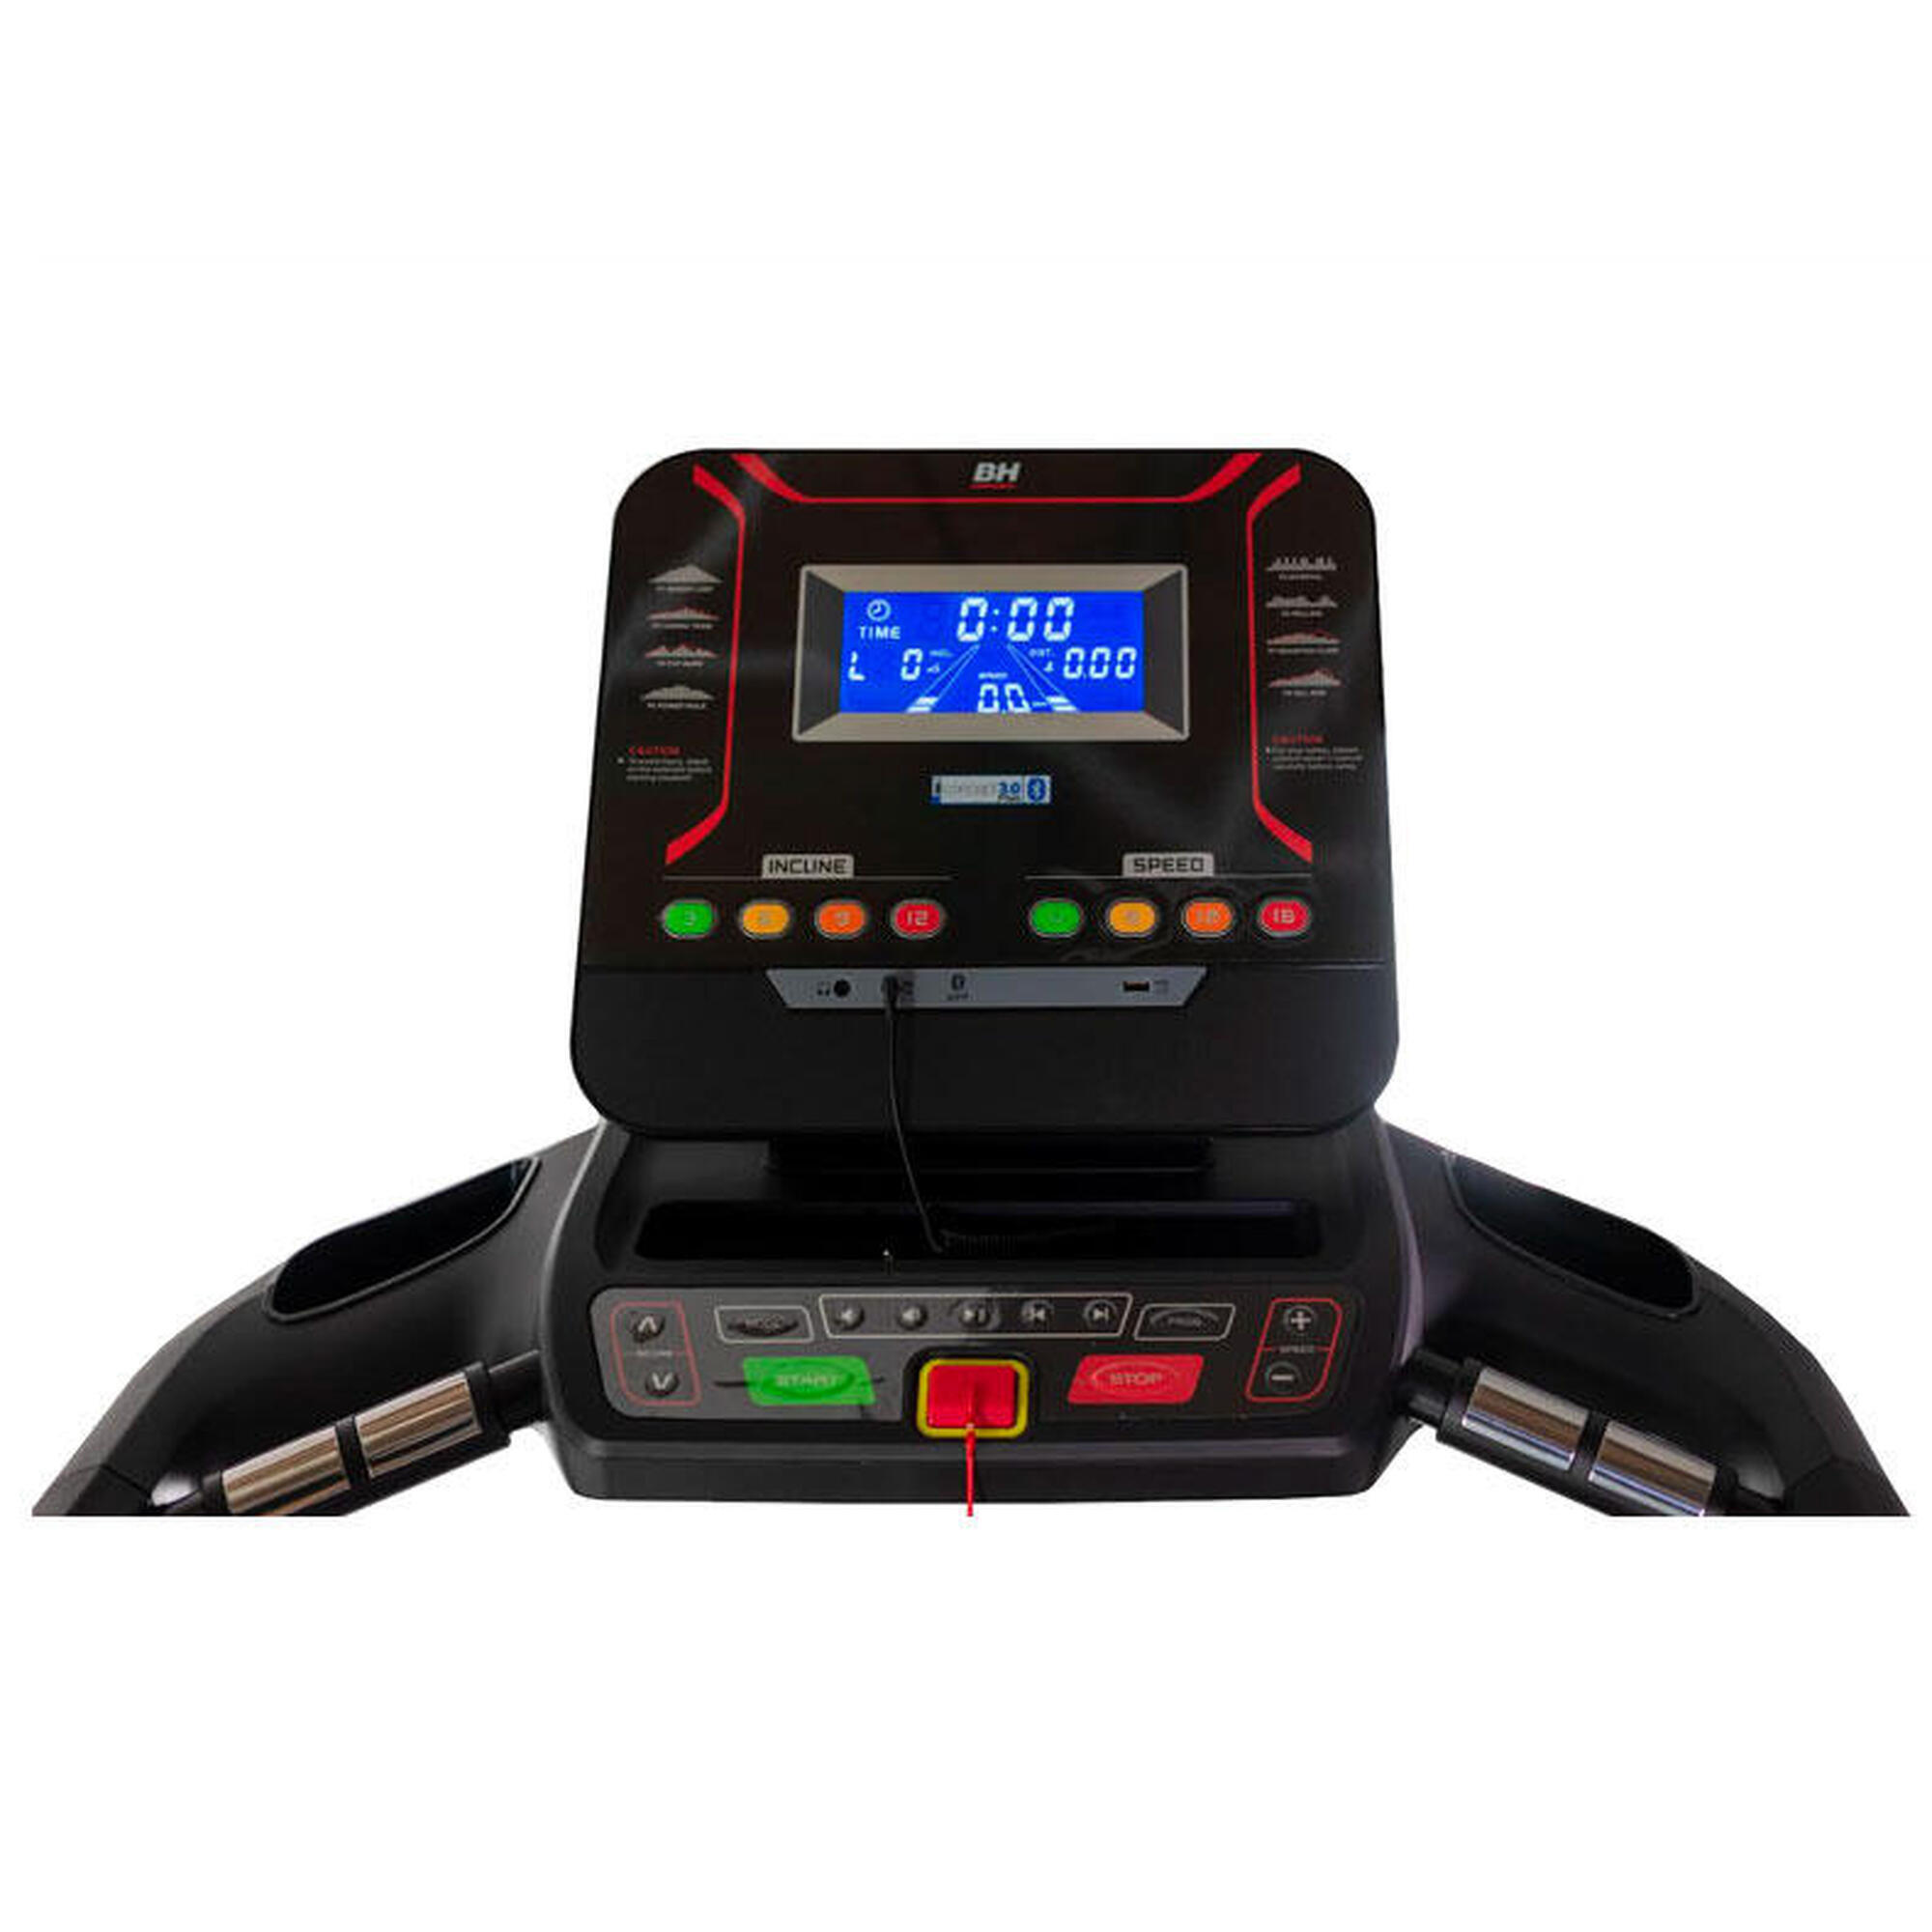 Tapis roulant - Boxster II - Kinomap,Zwift - 20km/h - 150x51cm - LCD